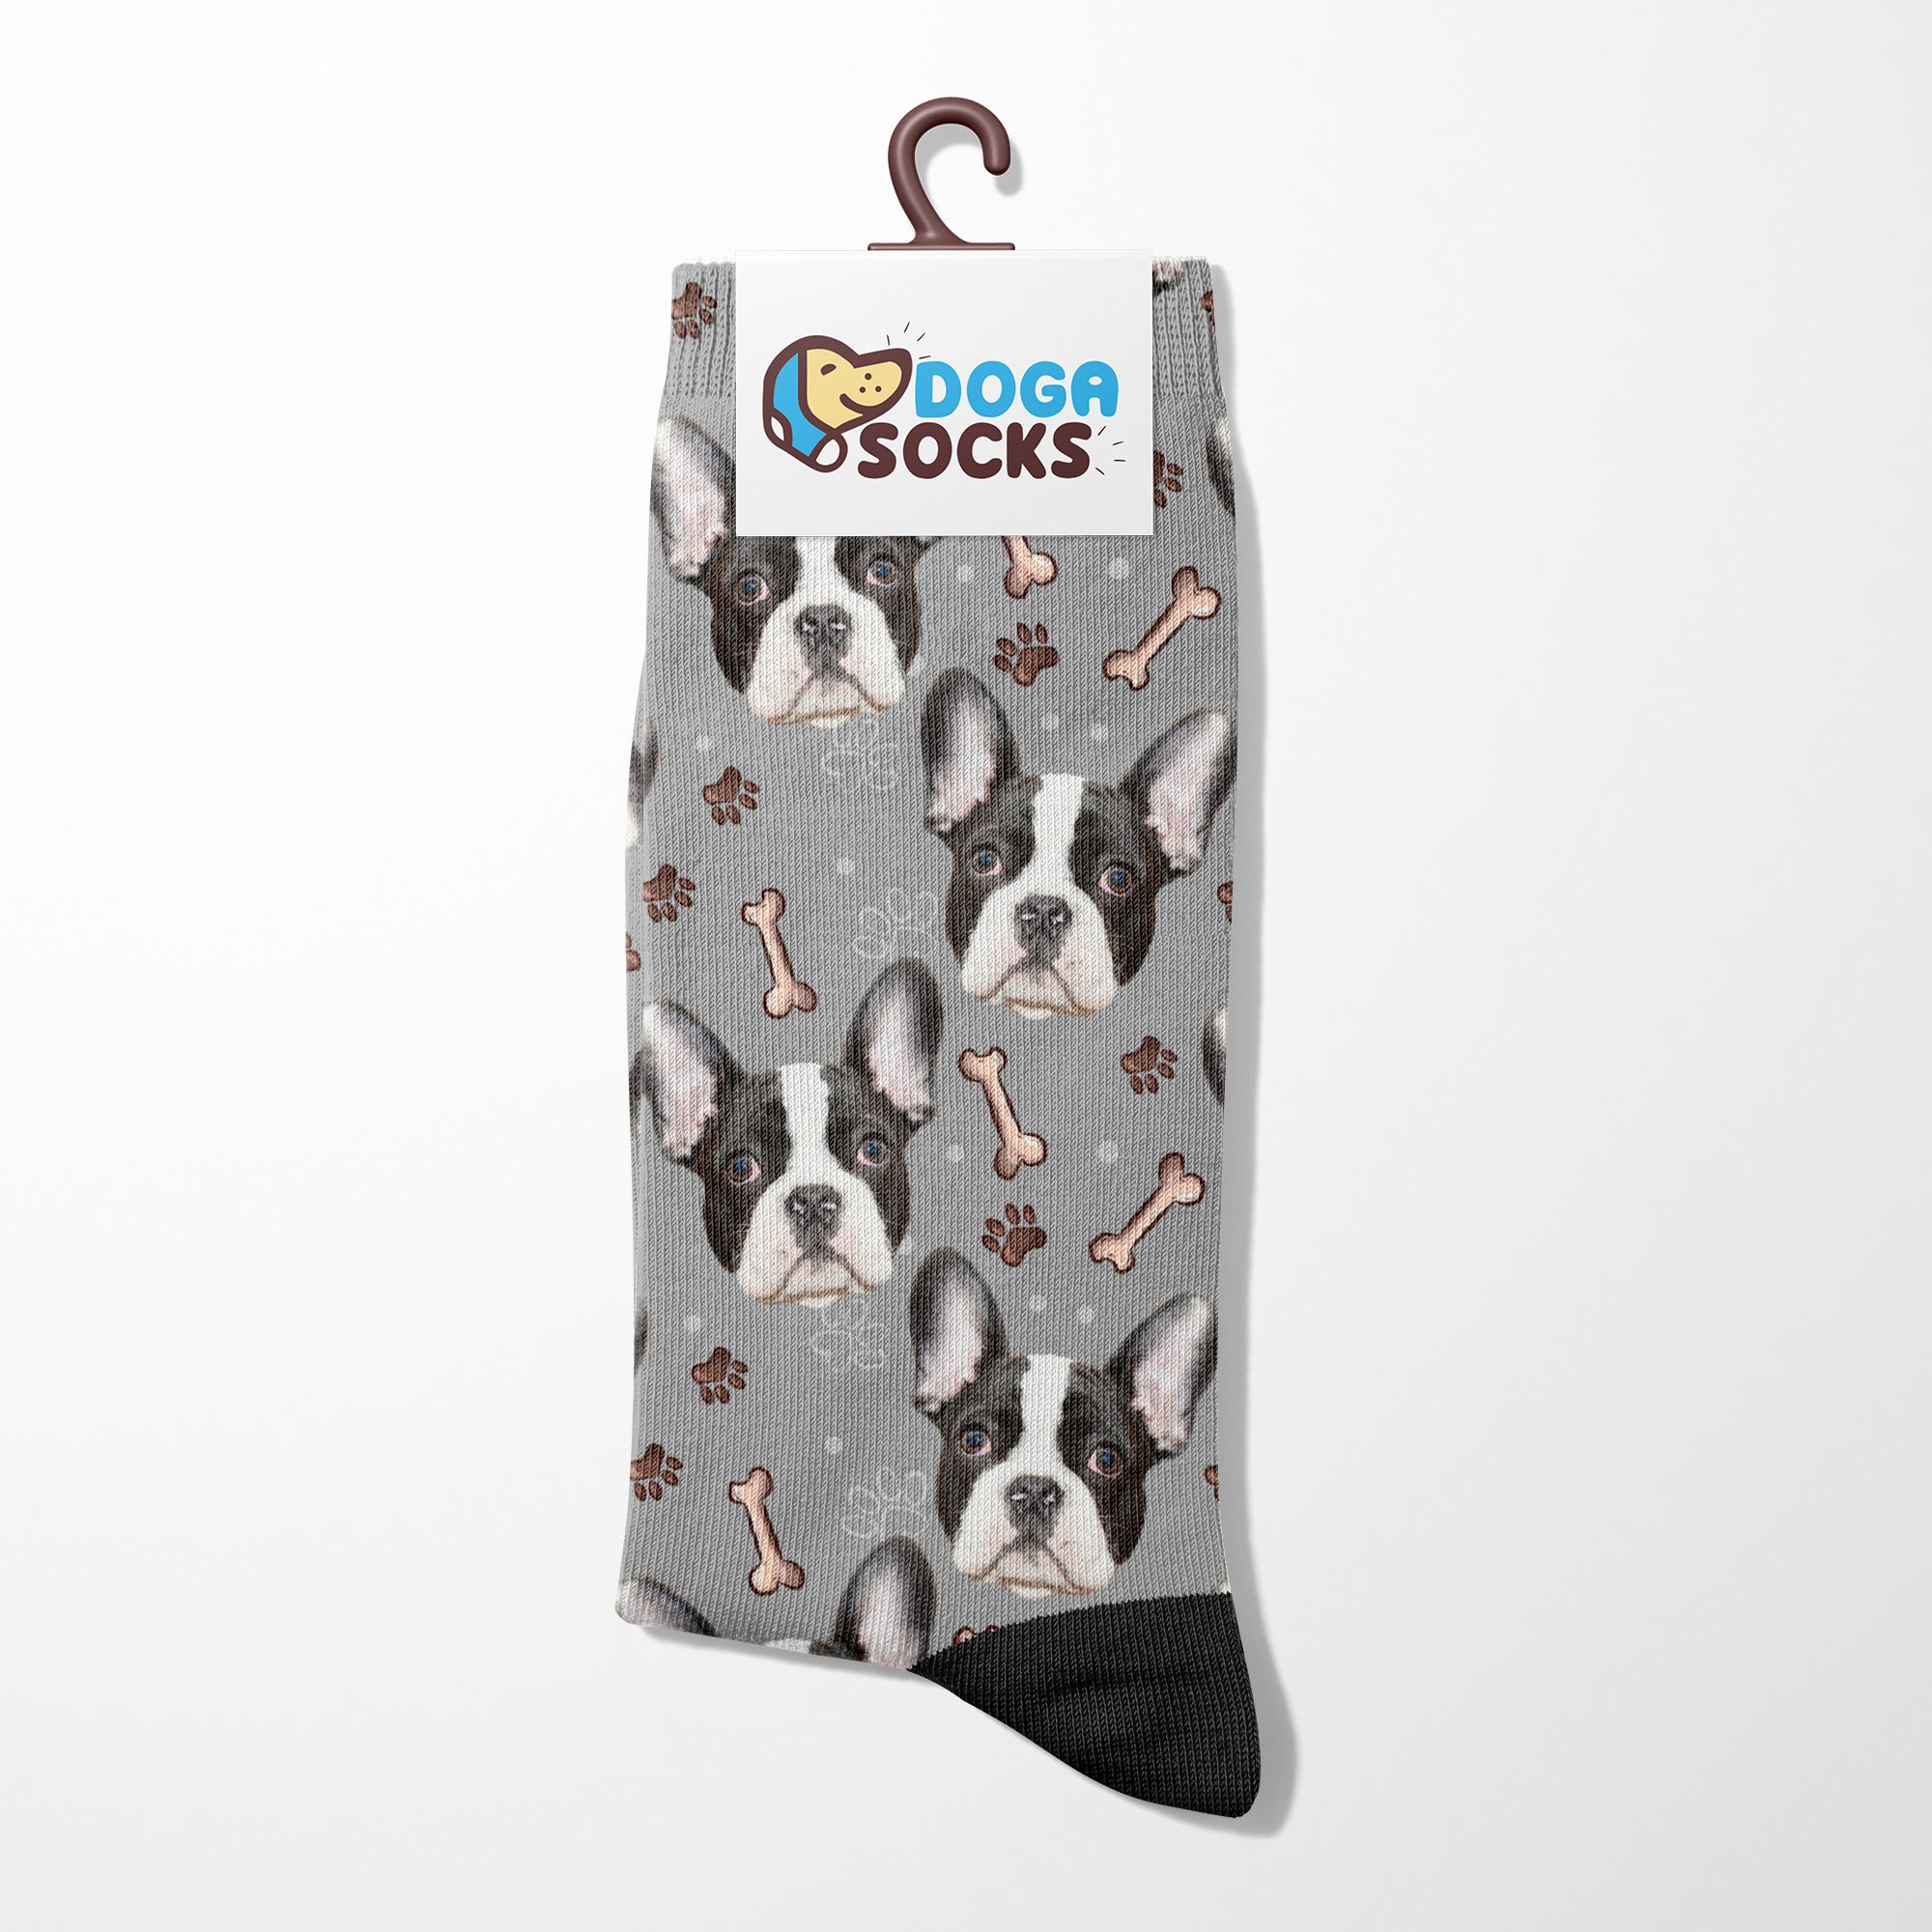 Custom Pet Face Socks with Dog Tracks Paws Bones Personalized Dog Tracks  Paws Socks with Faces Picture for Husband